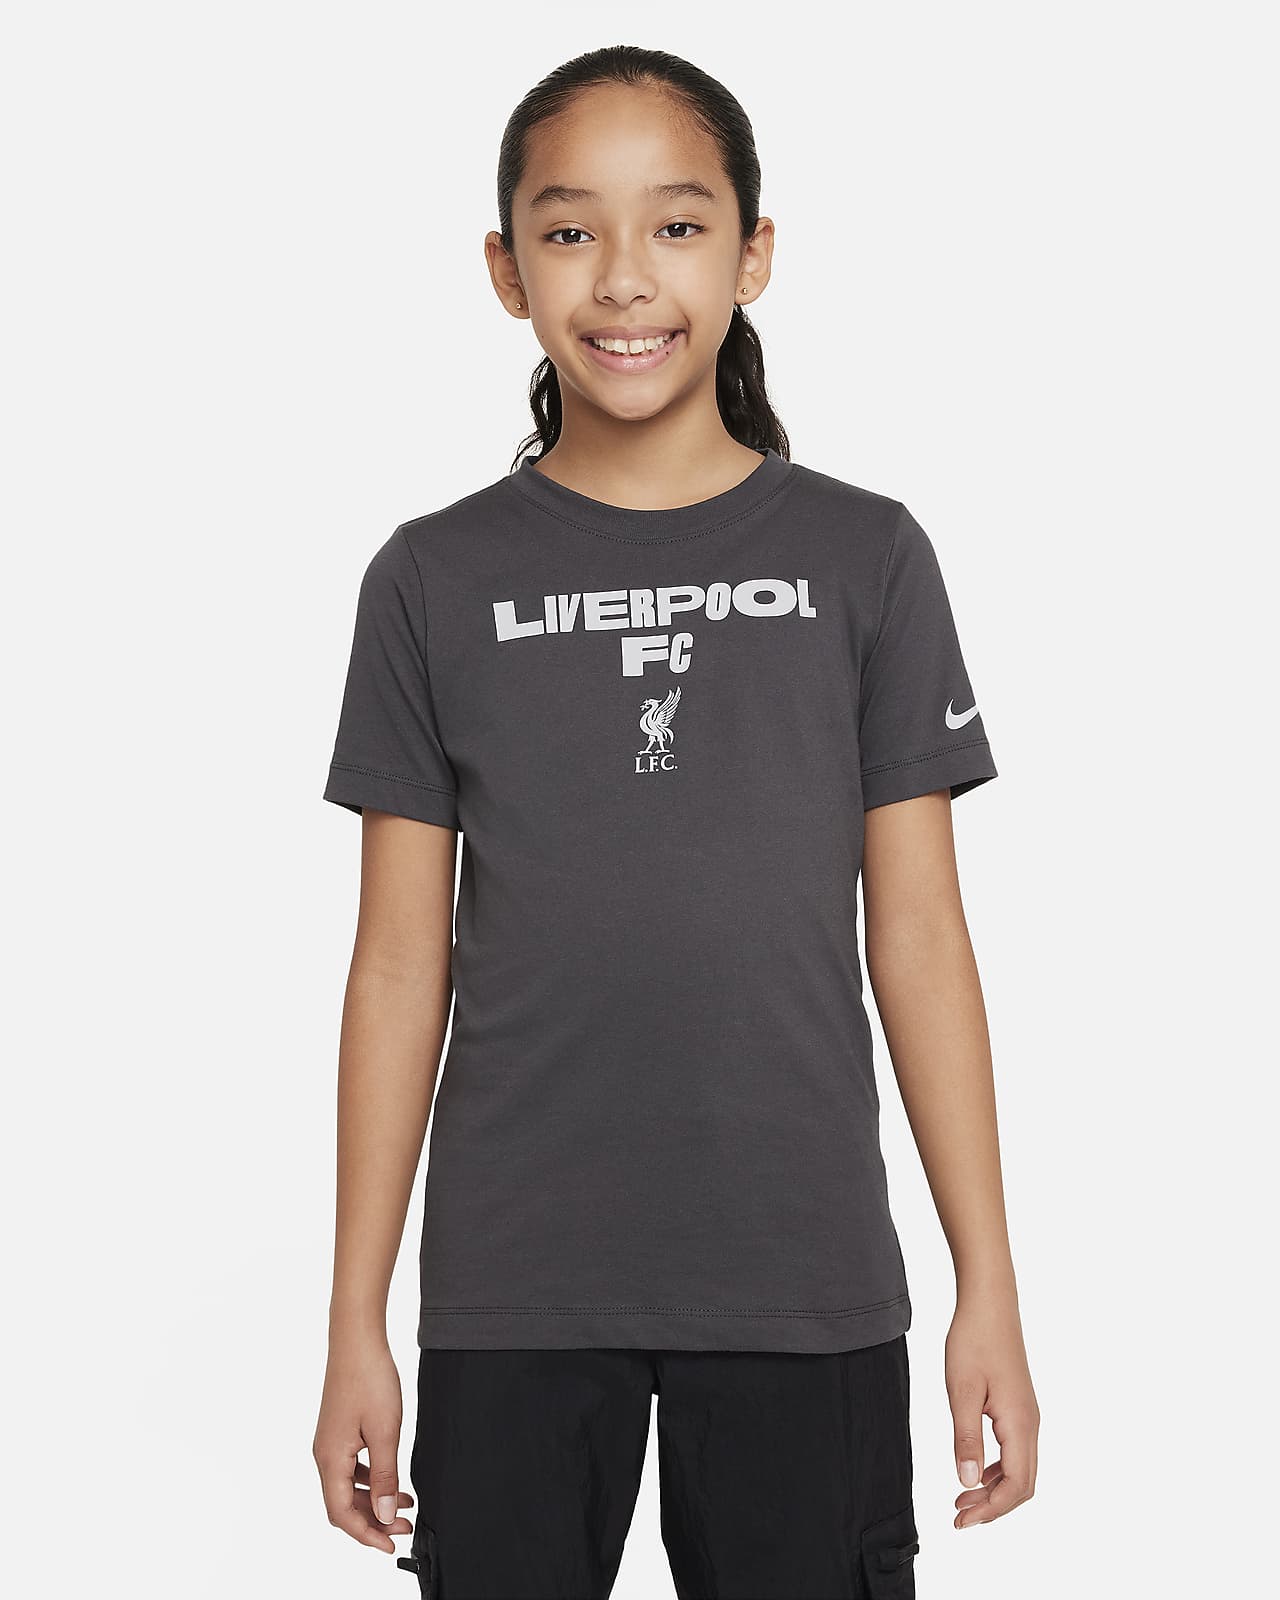 Liverpool FC Nike Genç Çocuk Futbol Tişörtü